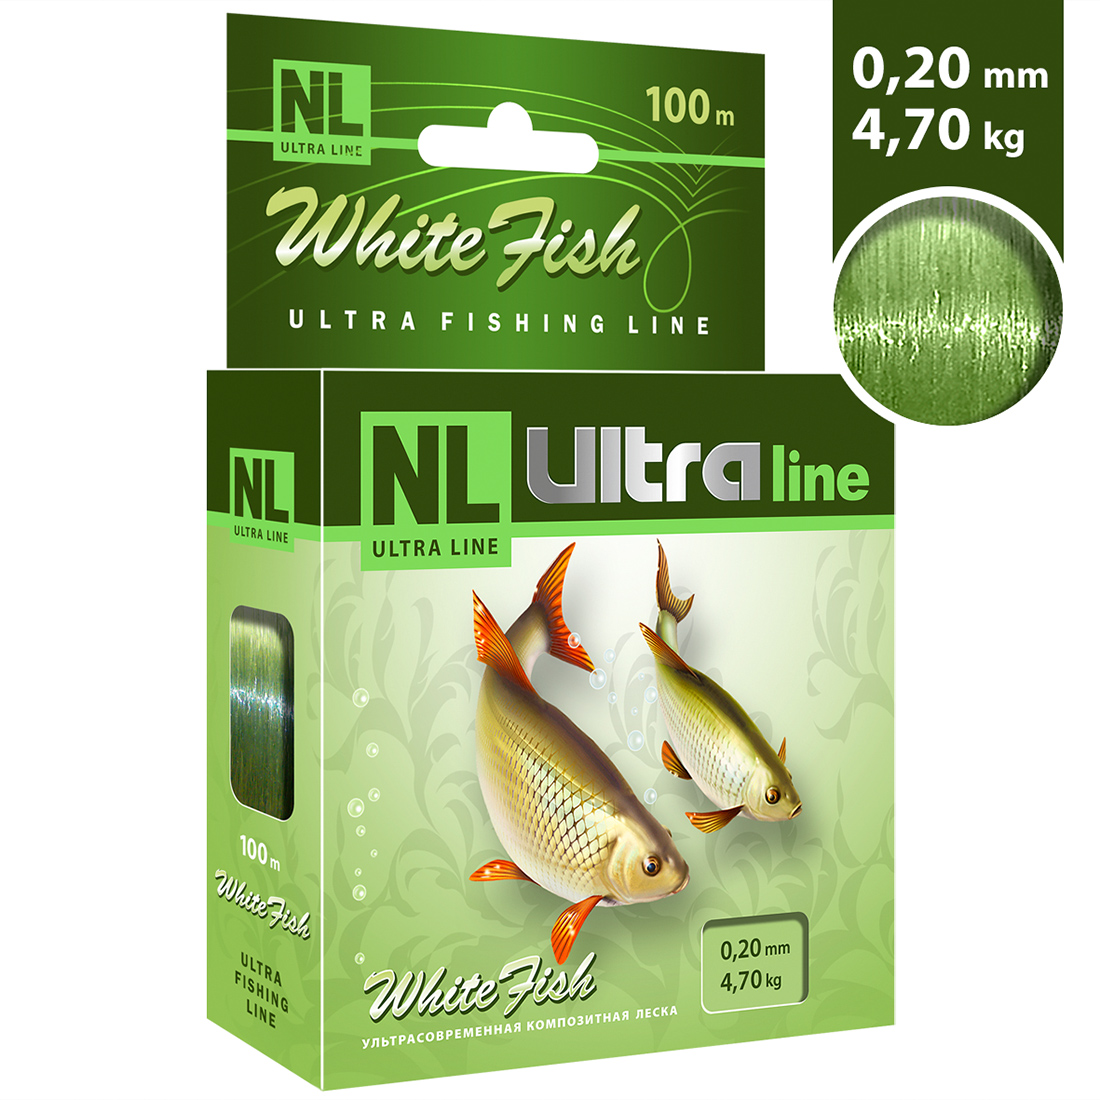 Леска AQUA NL ULTRA WHITE FISH (Белая рыба) 100m 0,20mm, светло-зеленая, test - 4,70kg